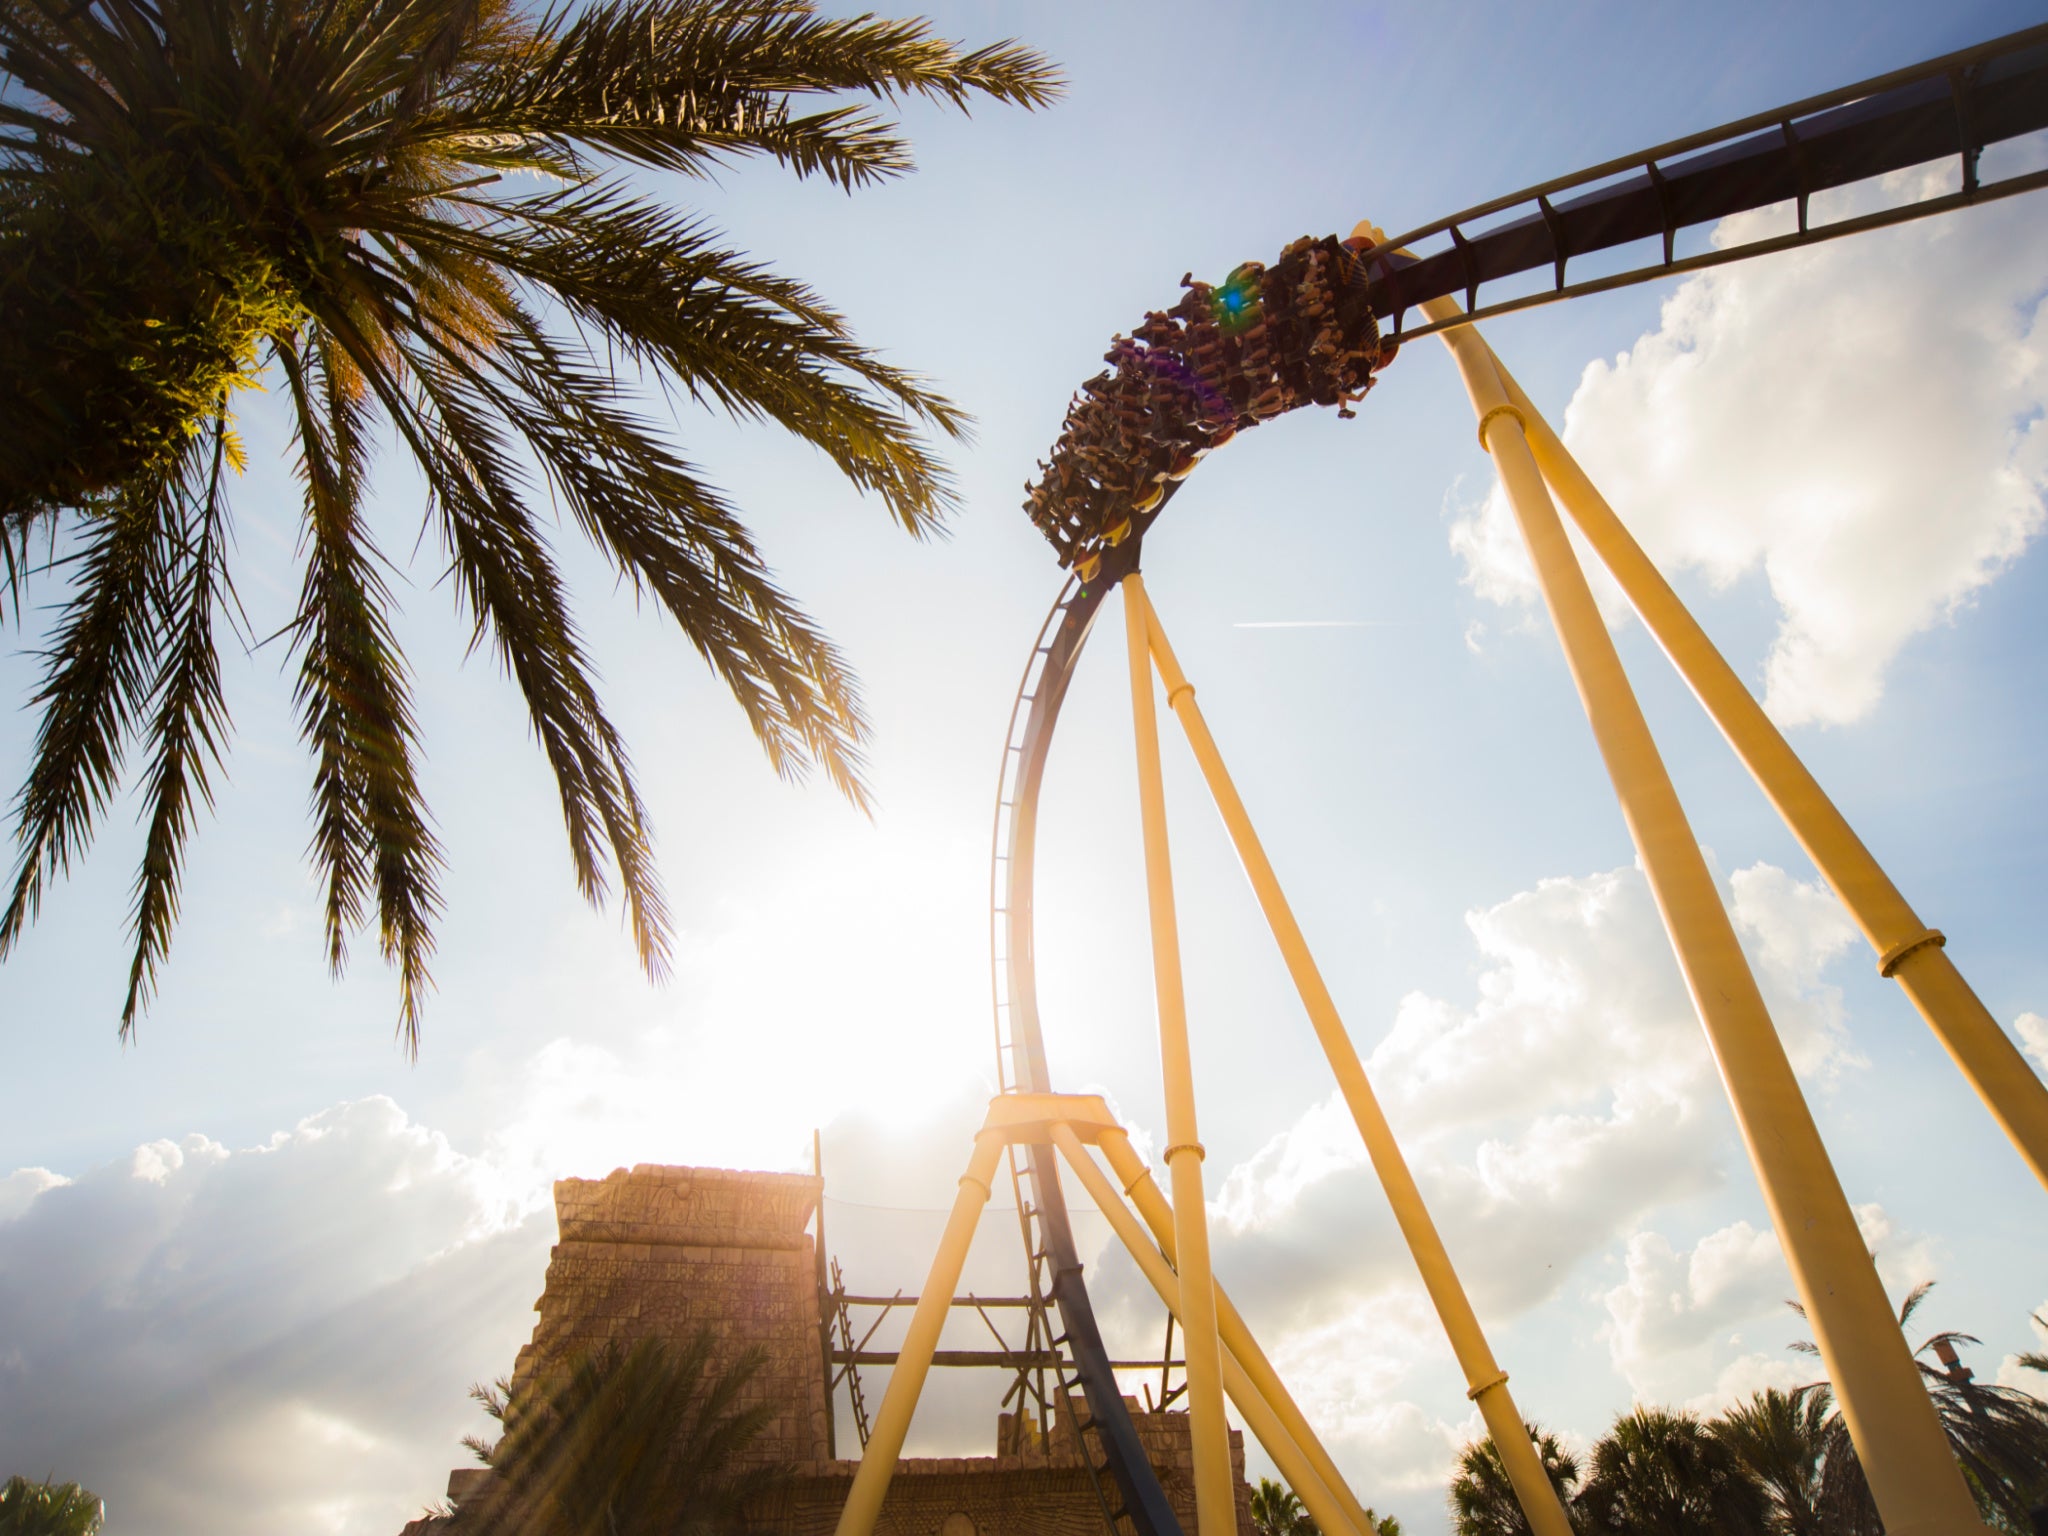 The Montu roller coaster at Busch Gardens has seven inversions